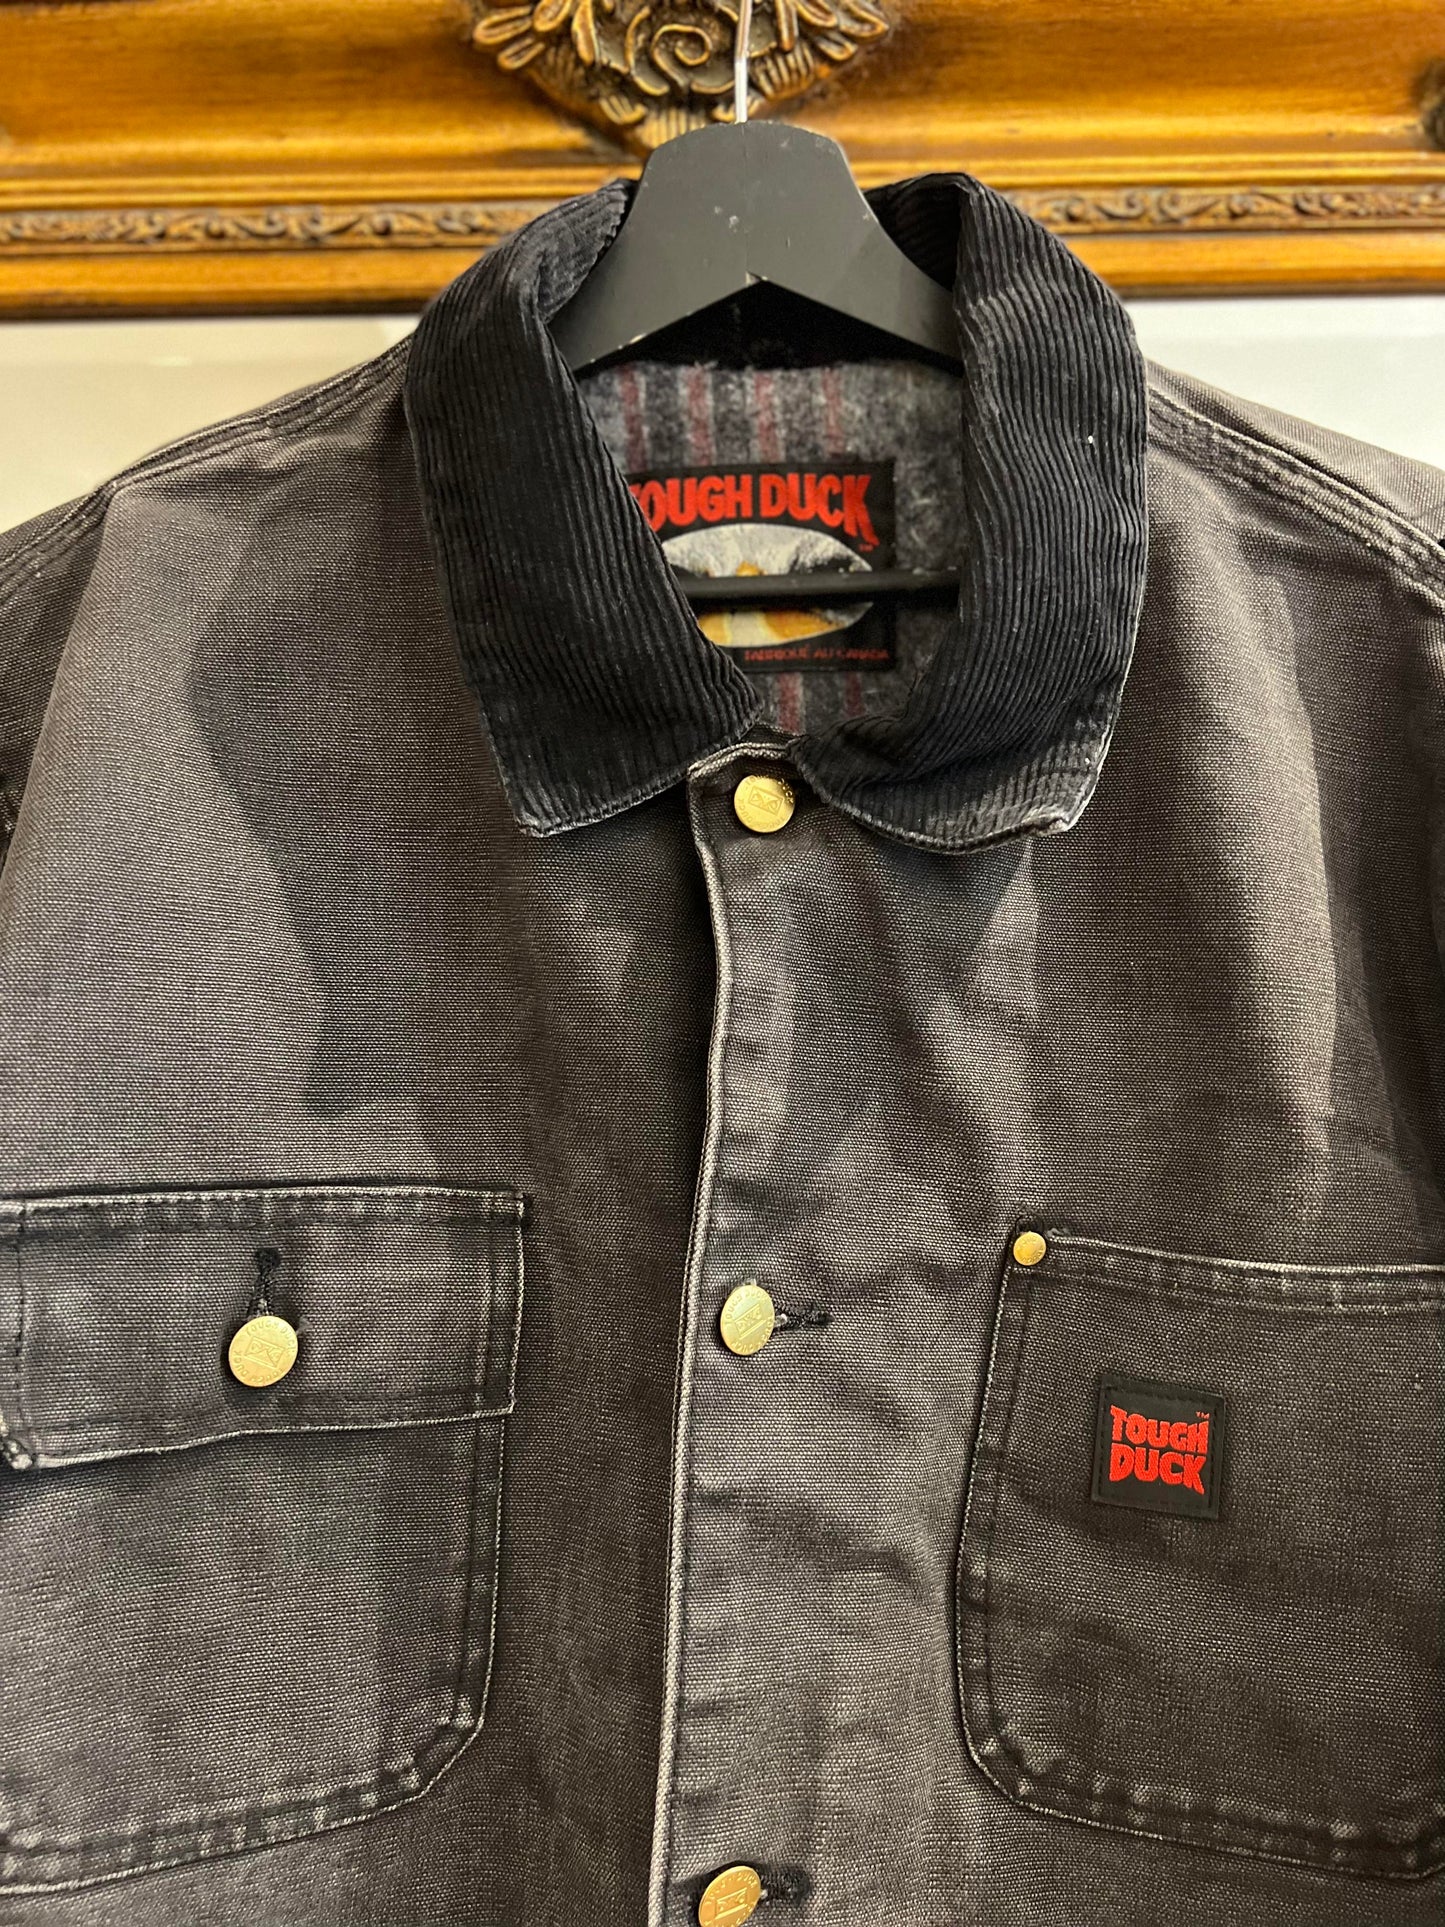 Vintage Tough Duck Workwear Jacket (XL)